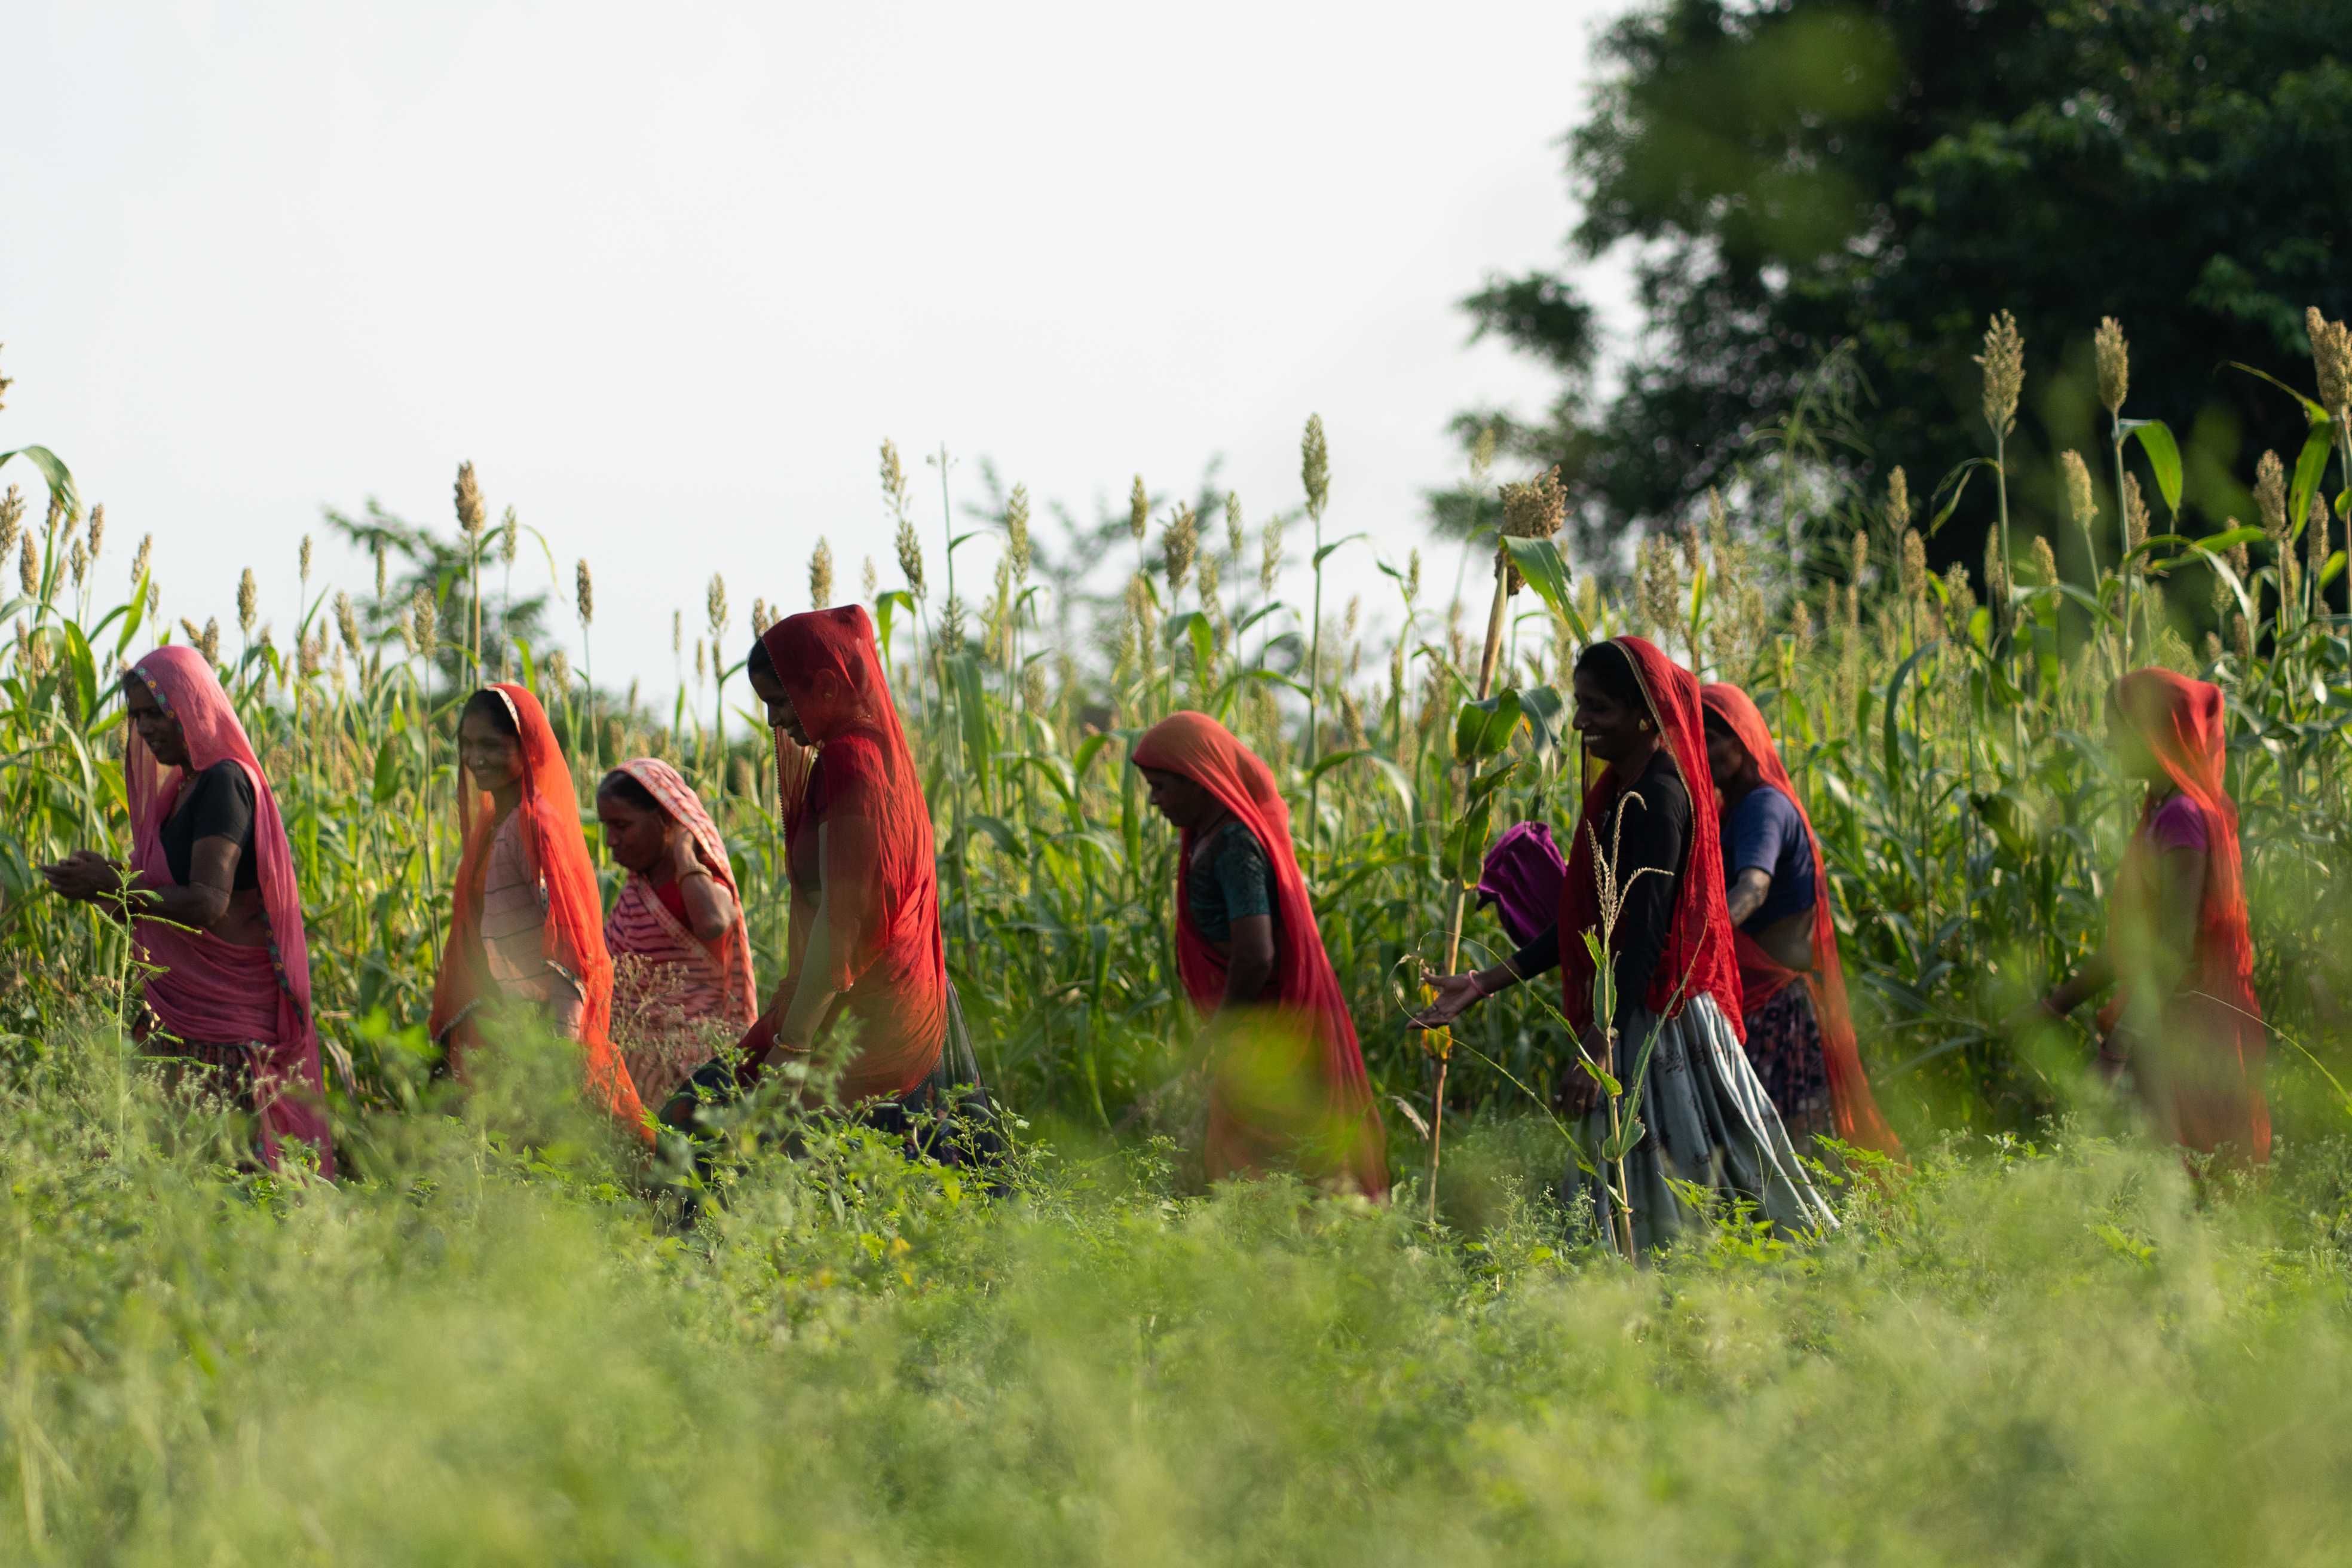 Women make their way through agricultural fields/land in Chittorgarh (Rajasthan, India). Photo Credit: UN Women India/Ruhani Kaur